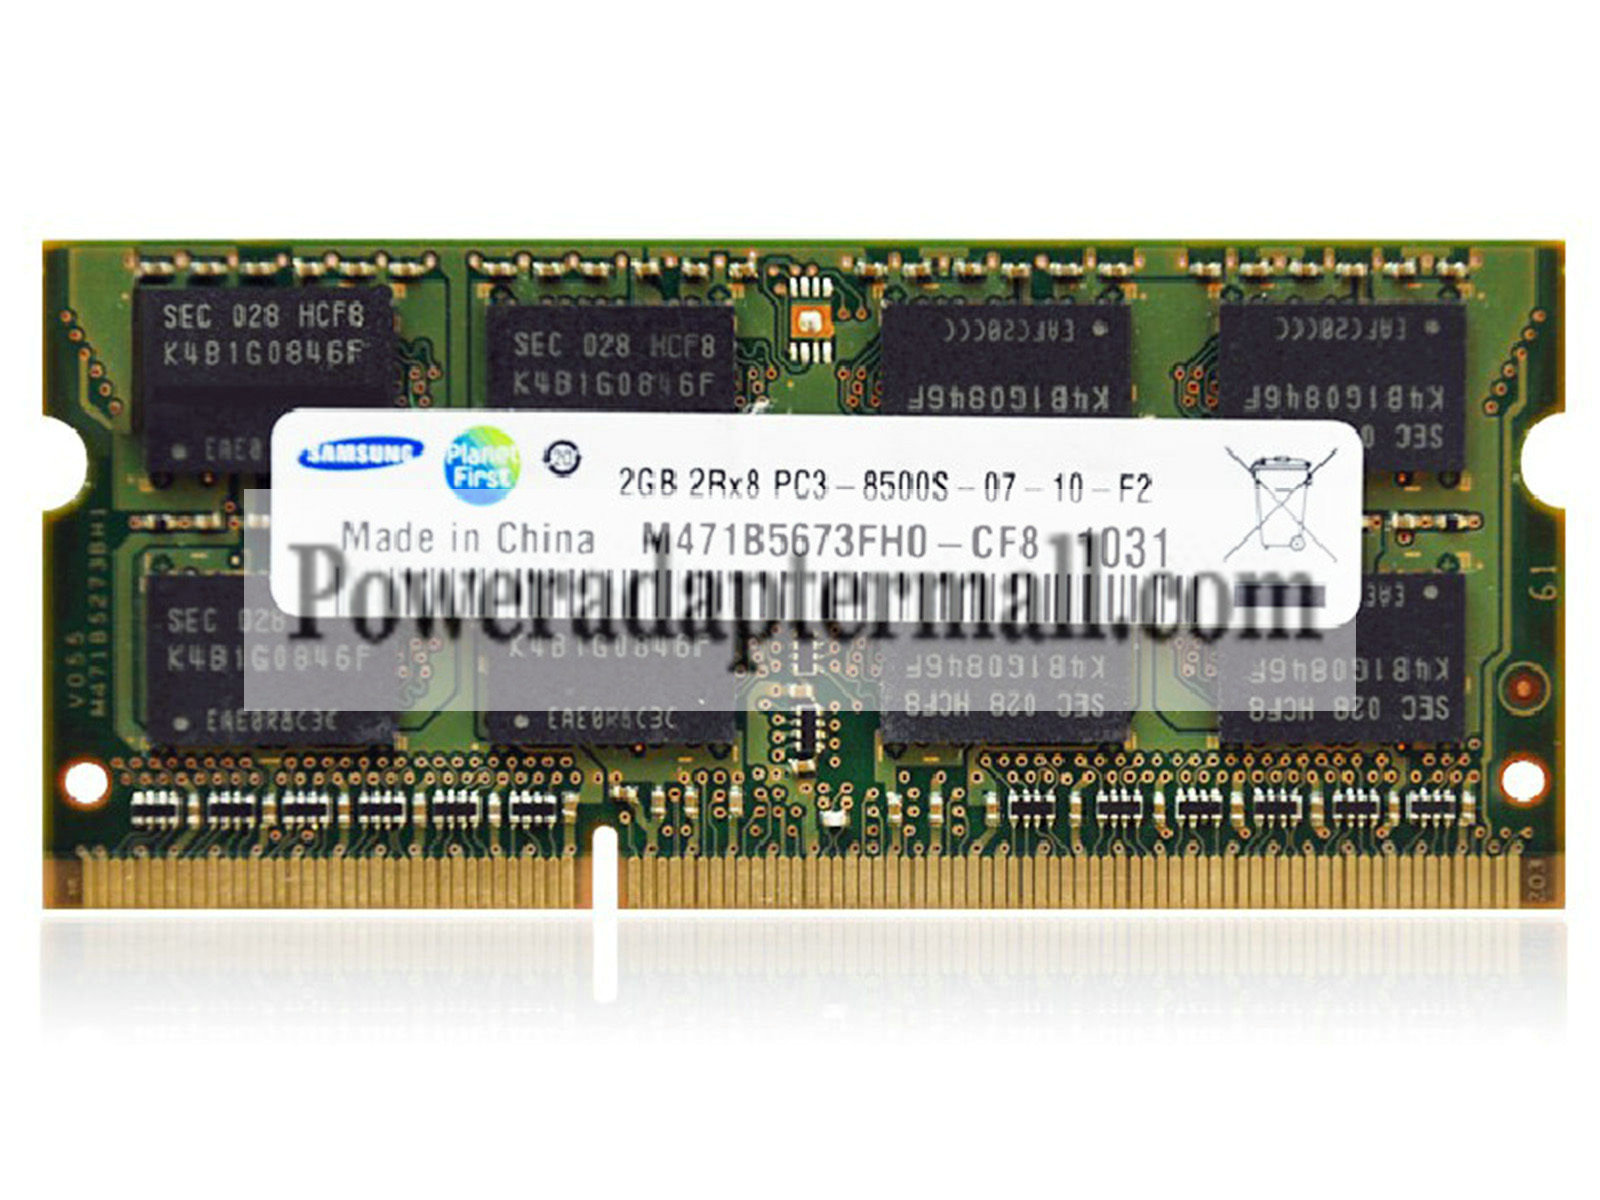 Samsung DDR3 2GB 1066Mhz 2Rx8 PC3-8500S 2048MB SODIMM Memory Ram